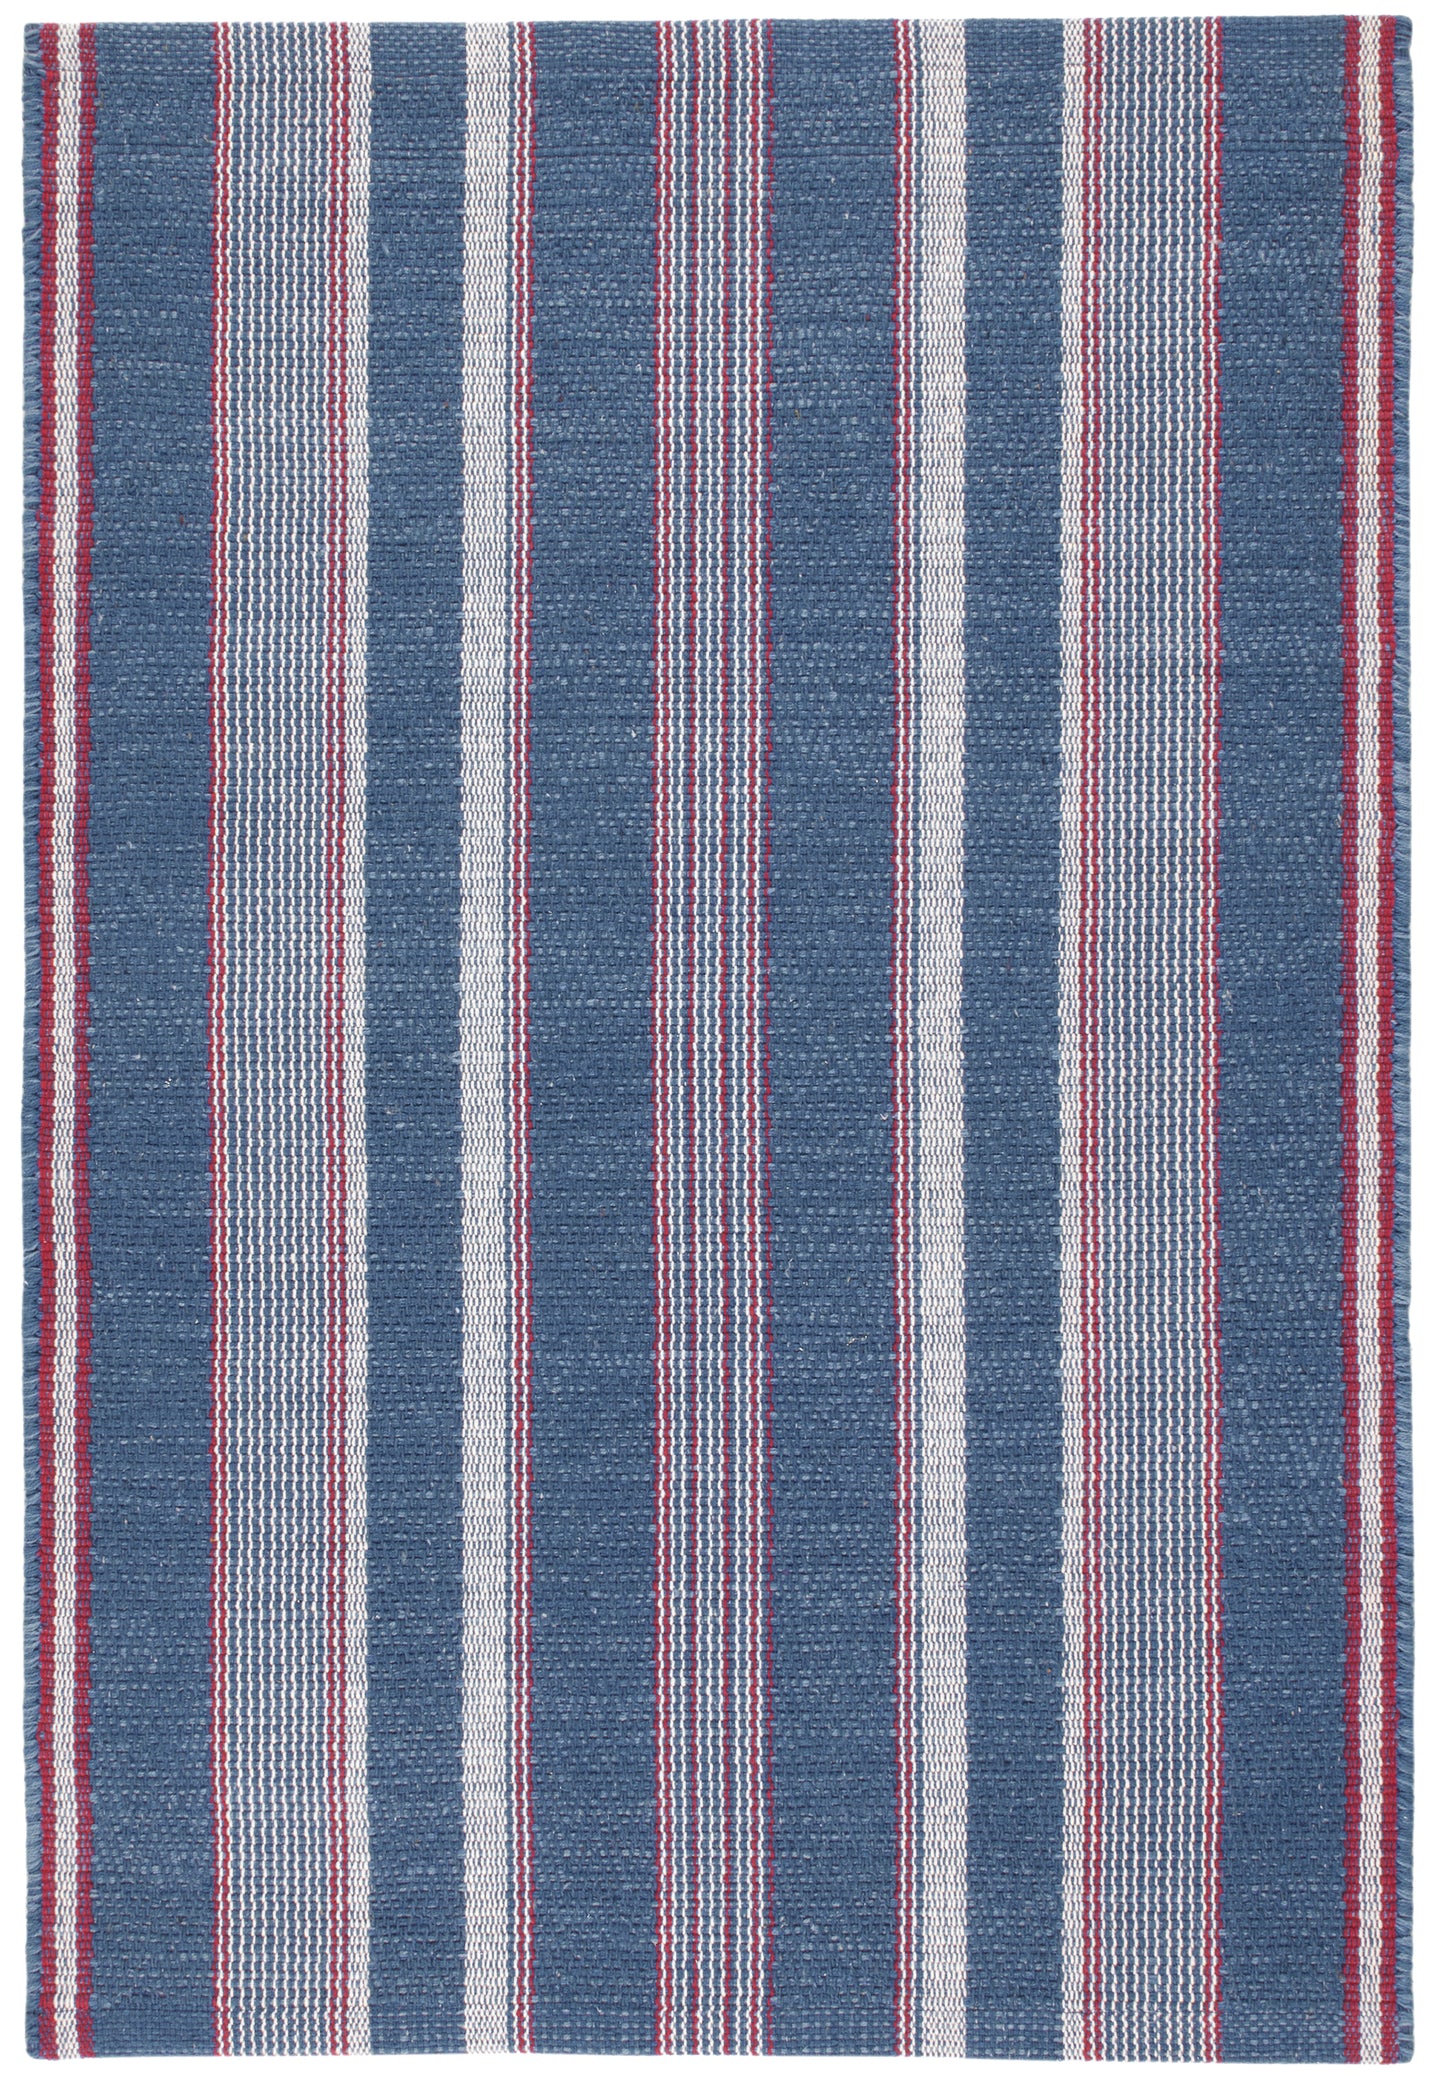 Rug - Woven Cotton - Hillsgrove Stripe Denim